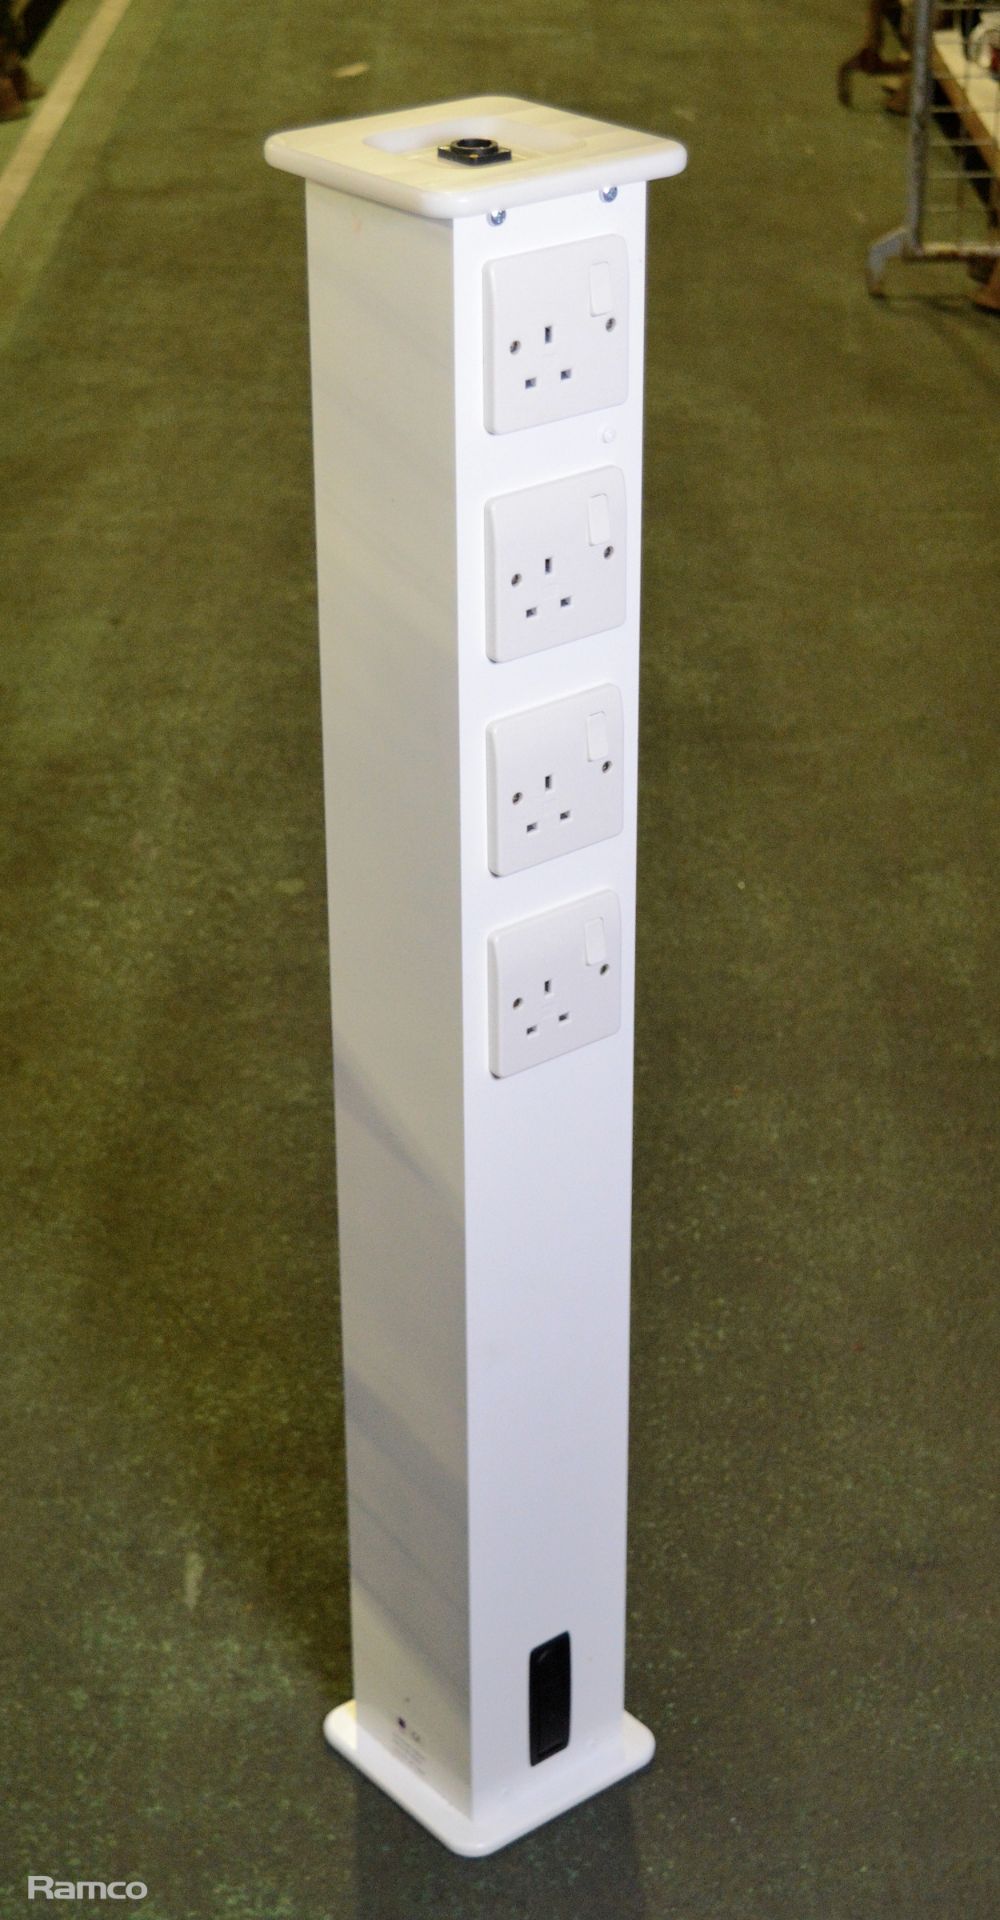 5x Power post Bases 8 Plug Socket with Surge Protector 240V - Image 2 of 3